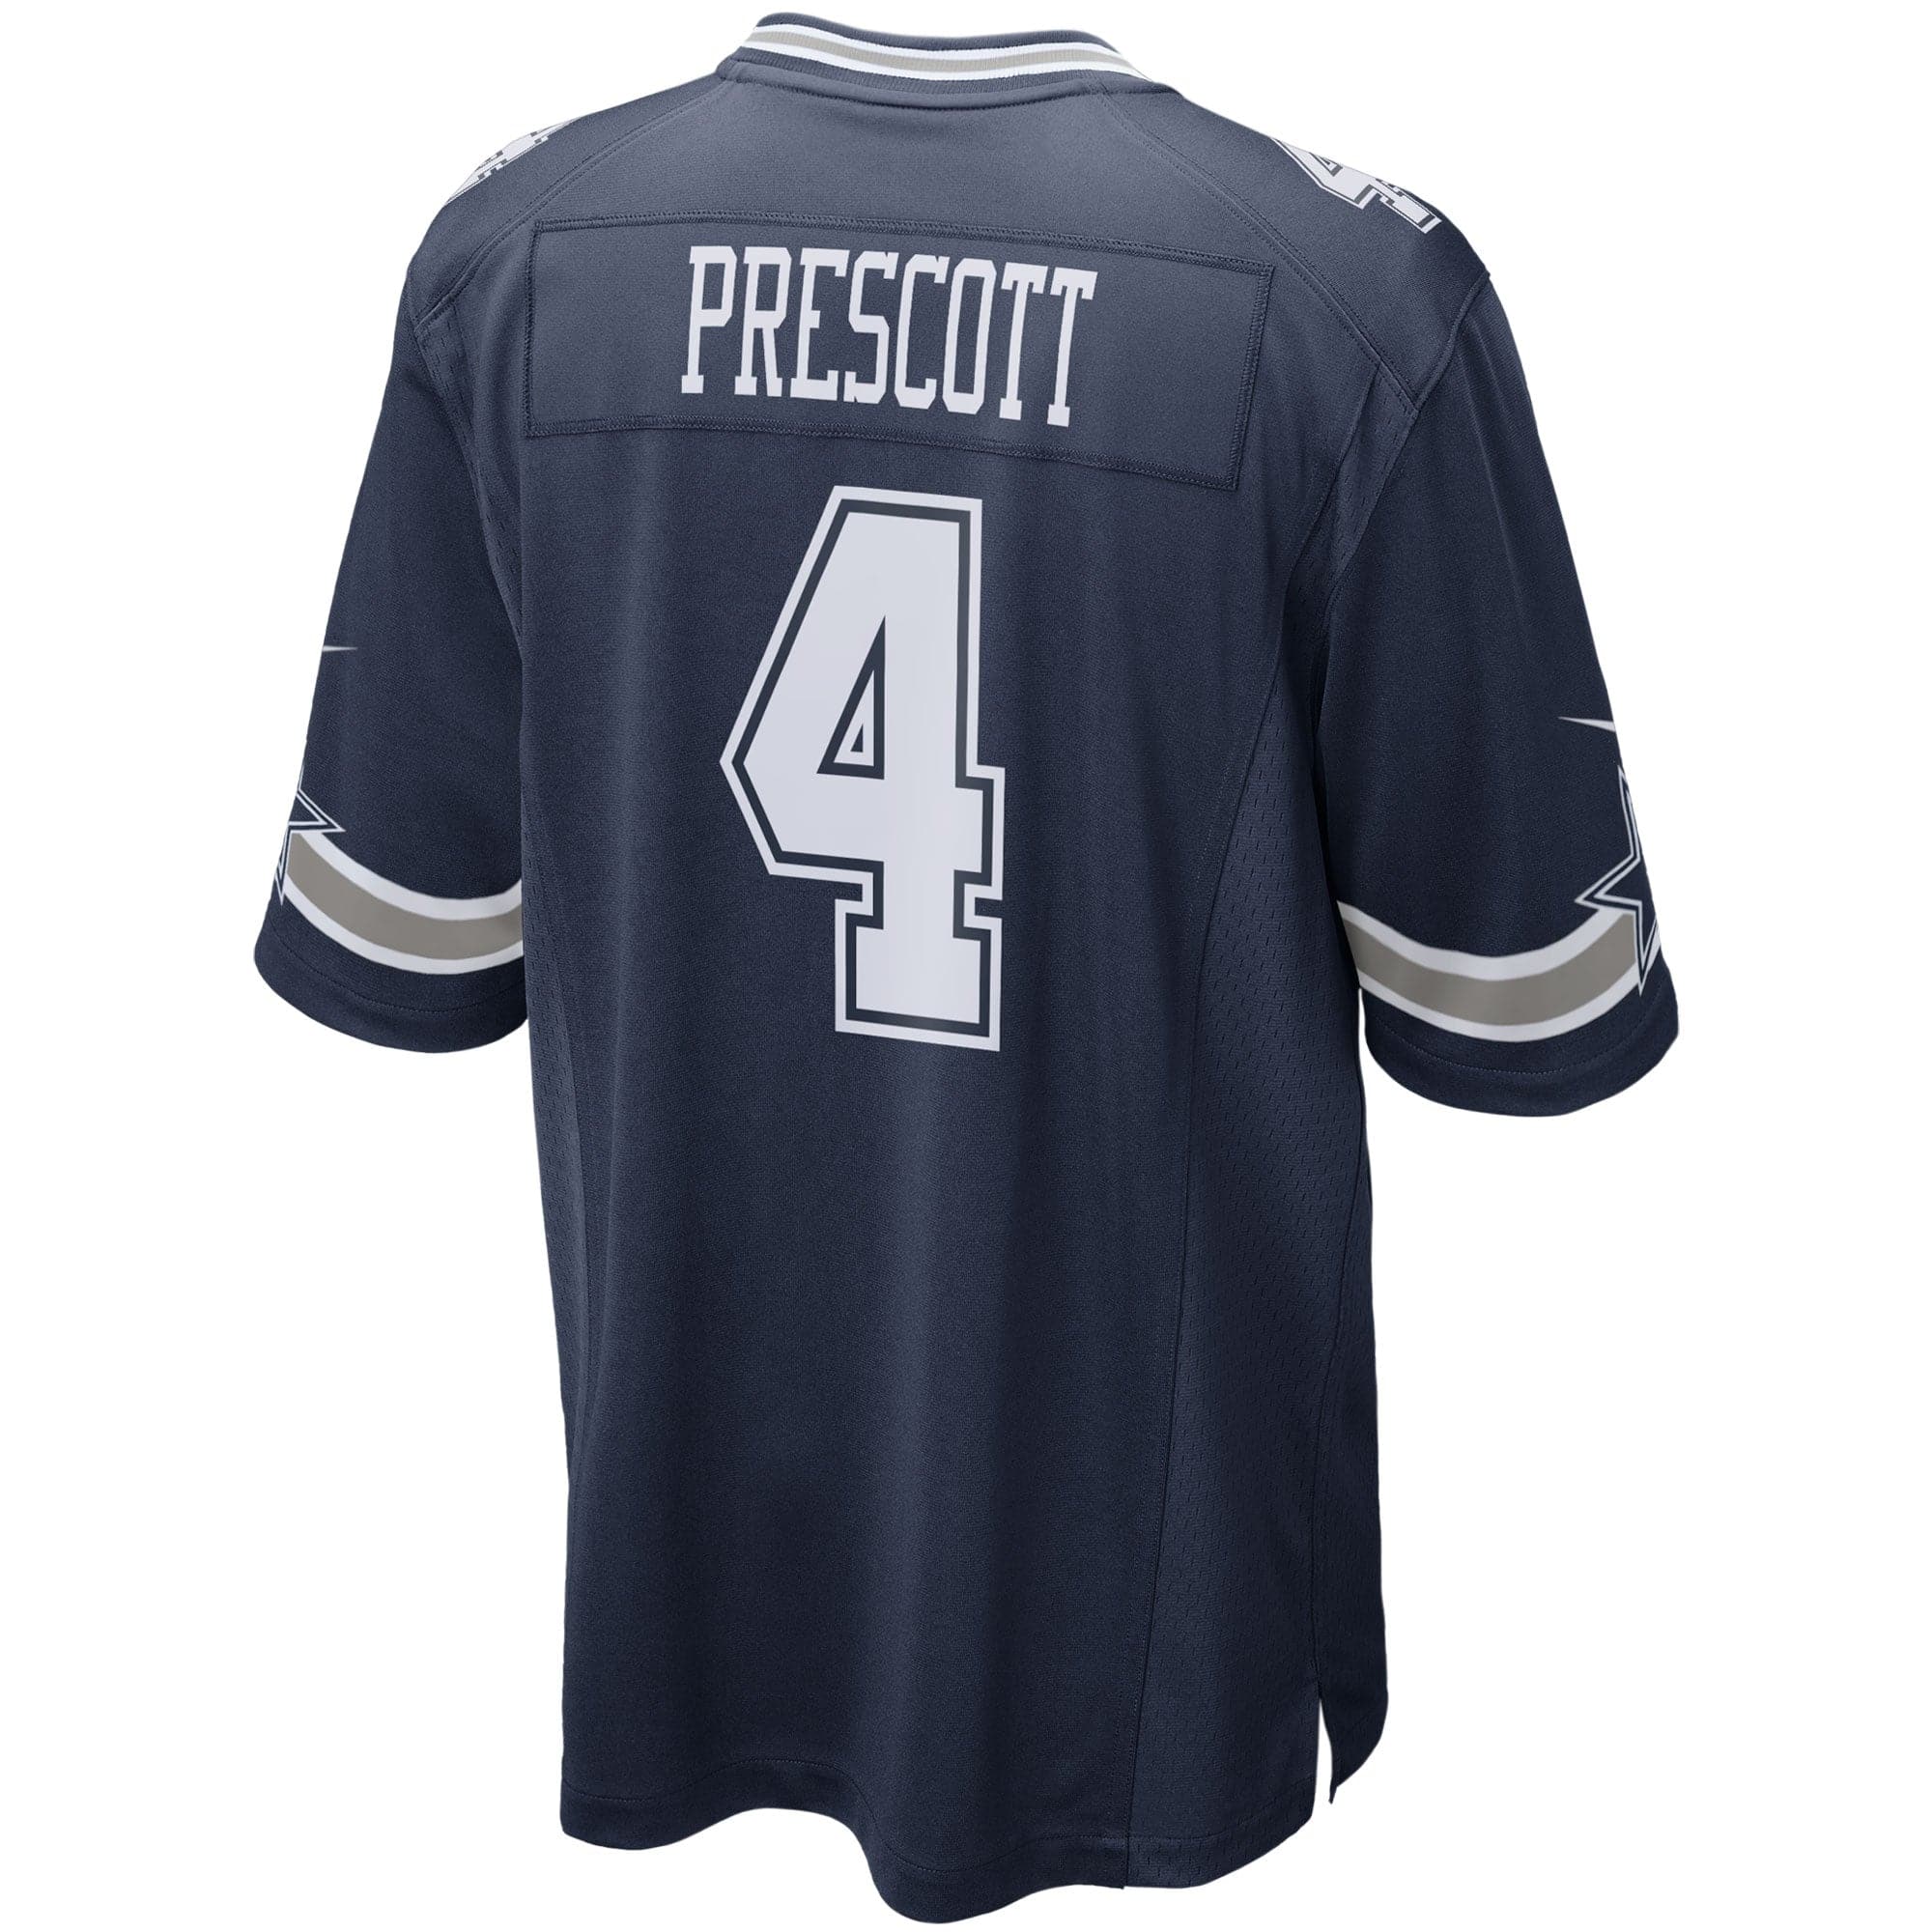 Dak Prescott Dallas Cowboys Nike NFL Game Jersey - Navy